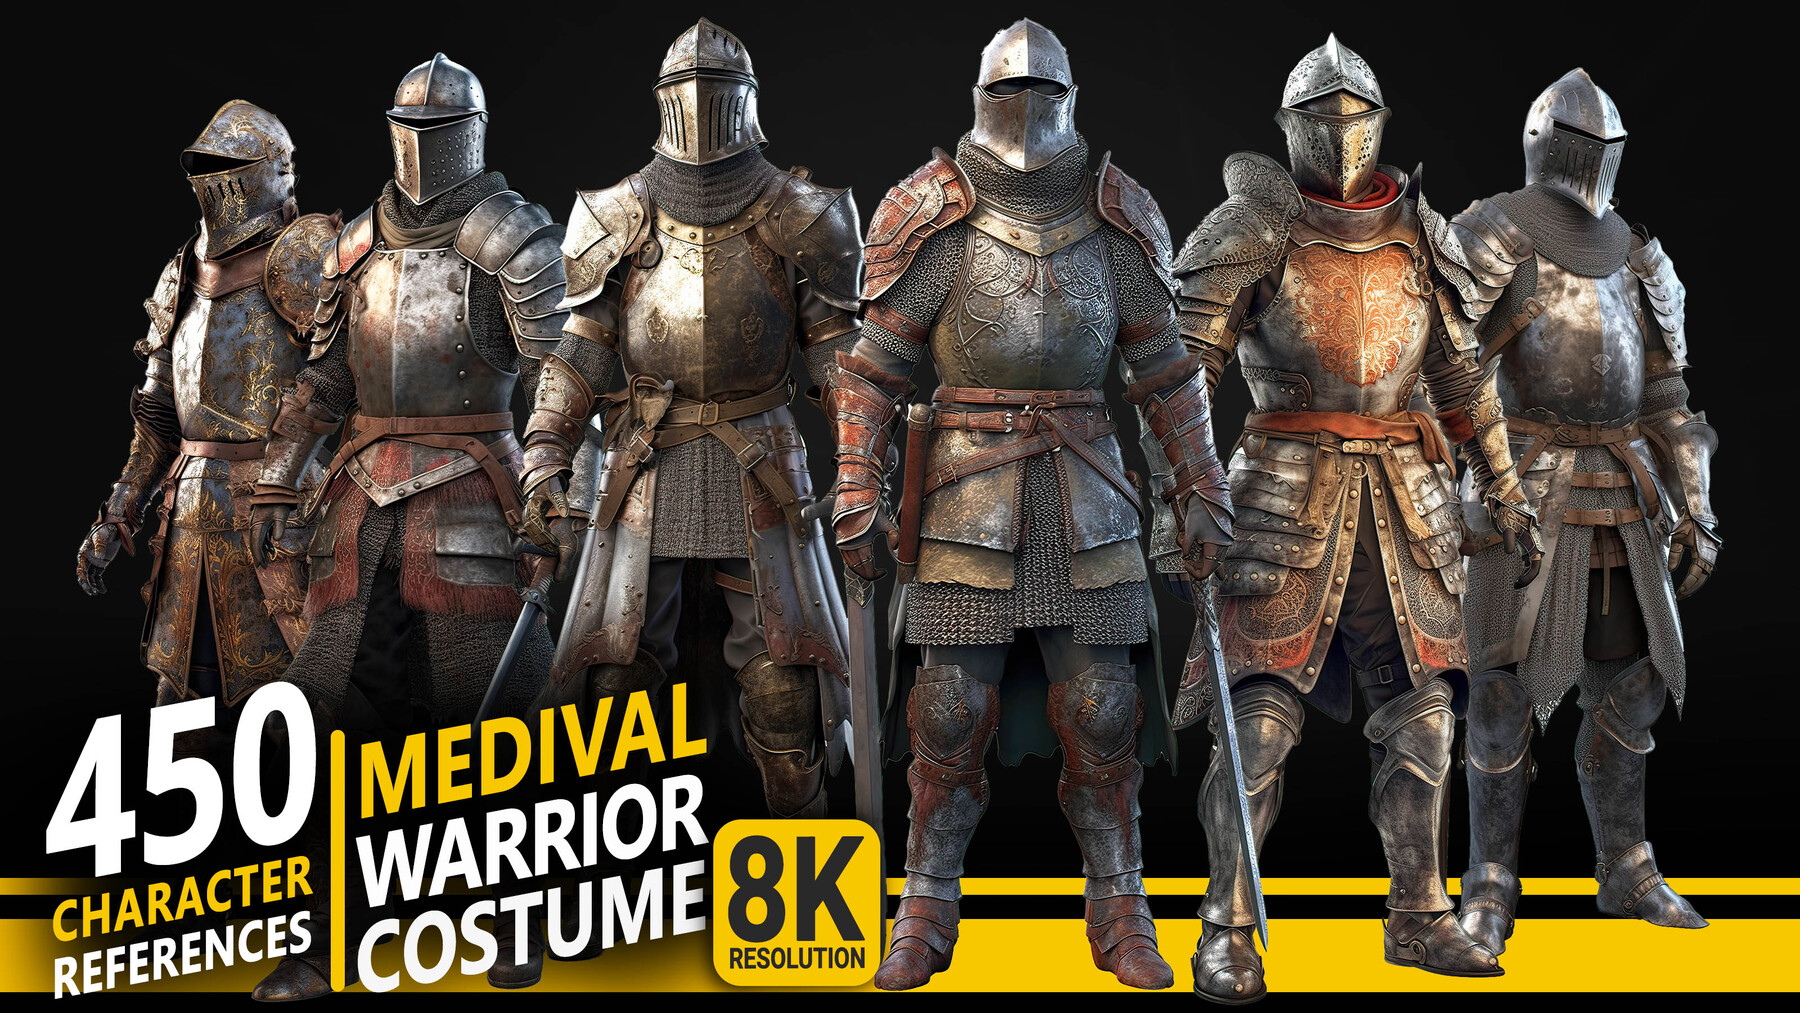 ArtStation - 450 Medival Warrior Armor - Character References | 8K Res ...